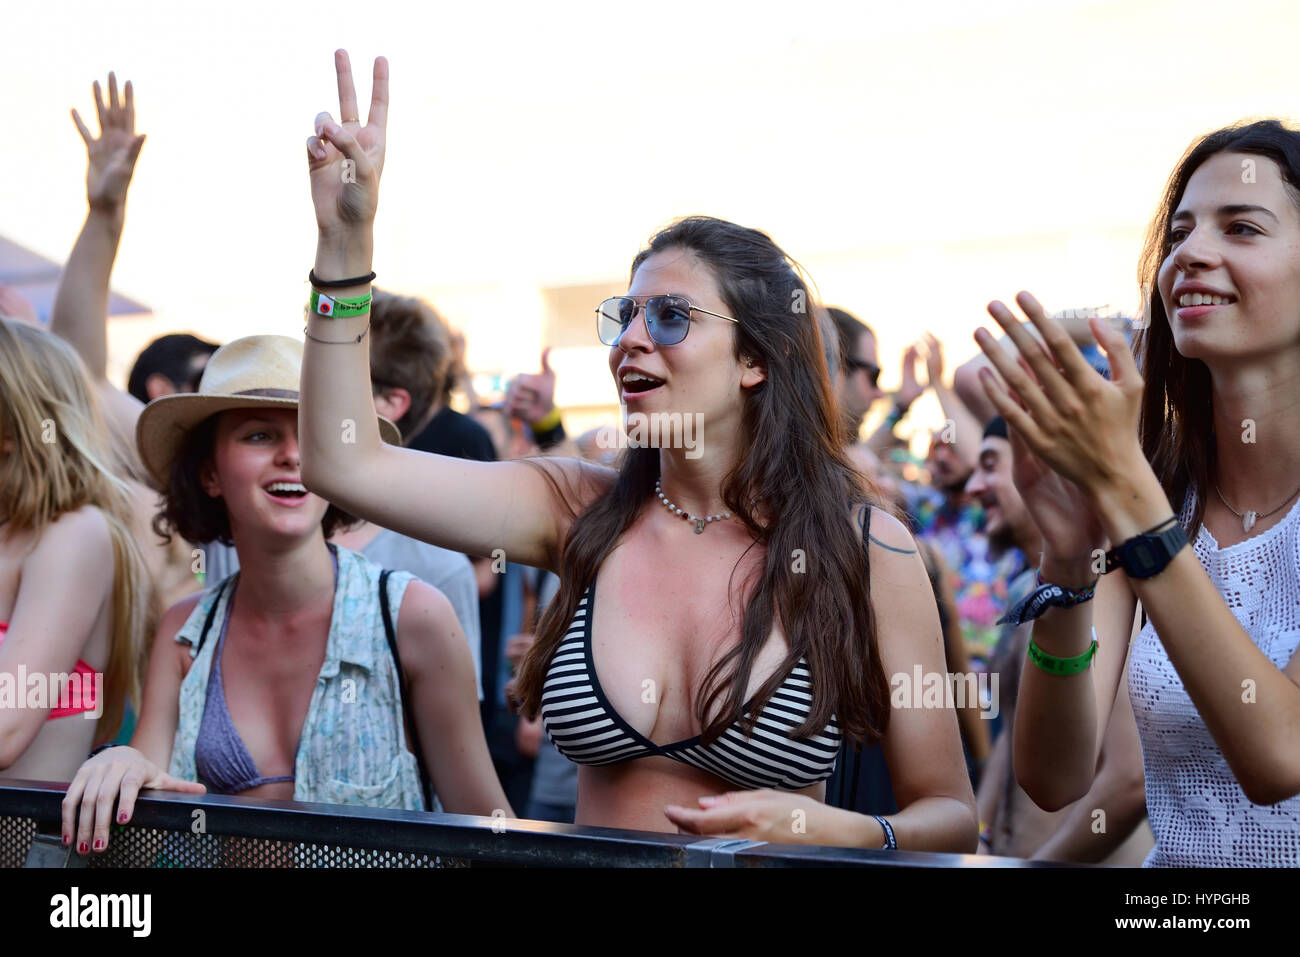 BARCELONA - JUN 20: People in a concert at Sonar Festival on June 20, 2015 in Barcelona, Spain. Stock Photo